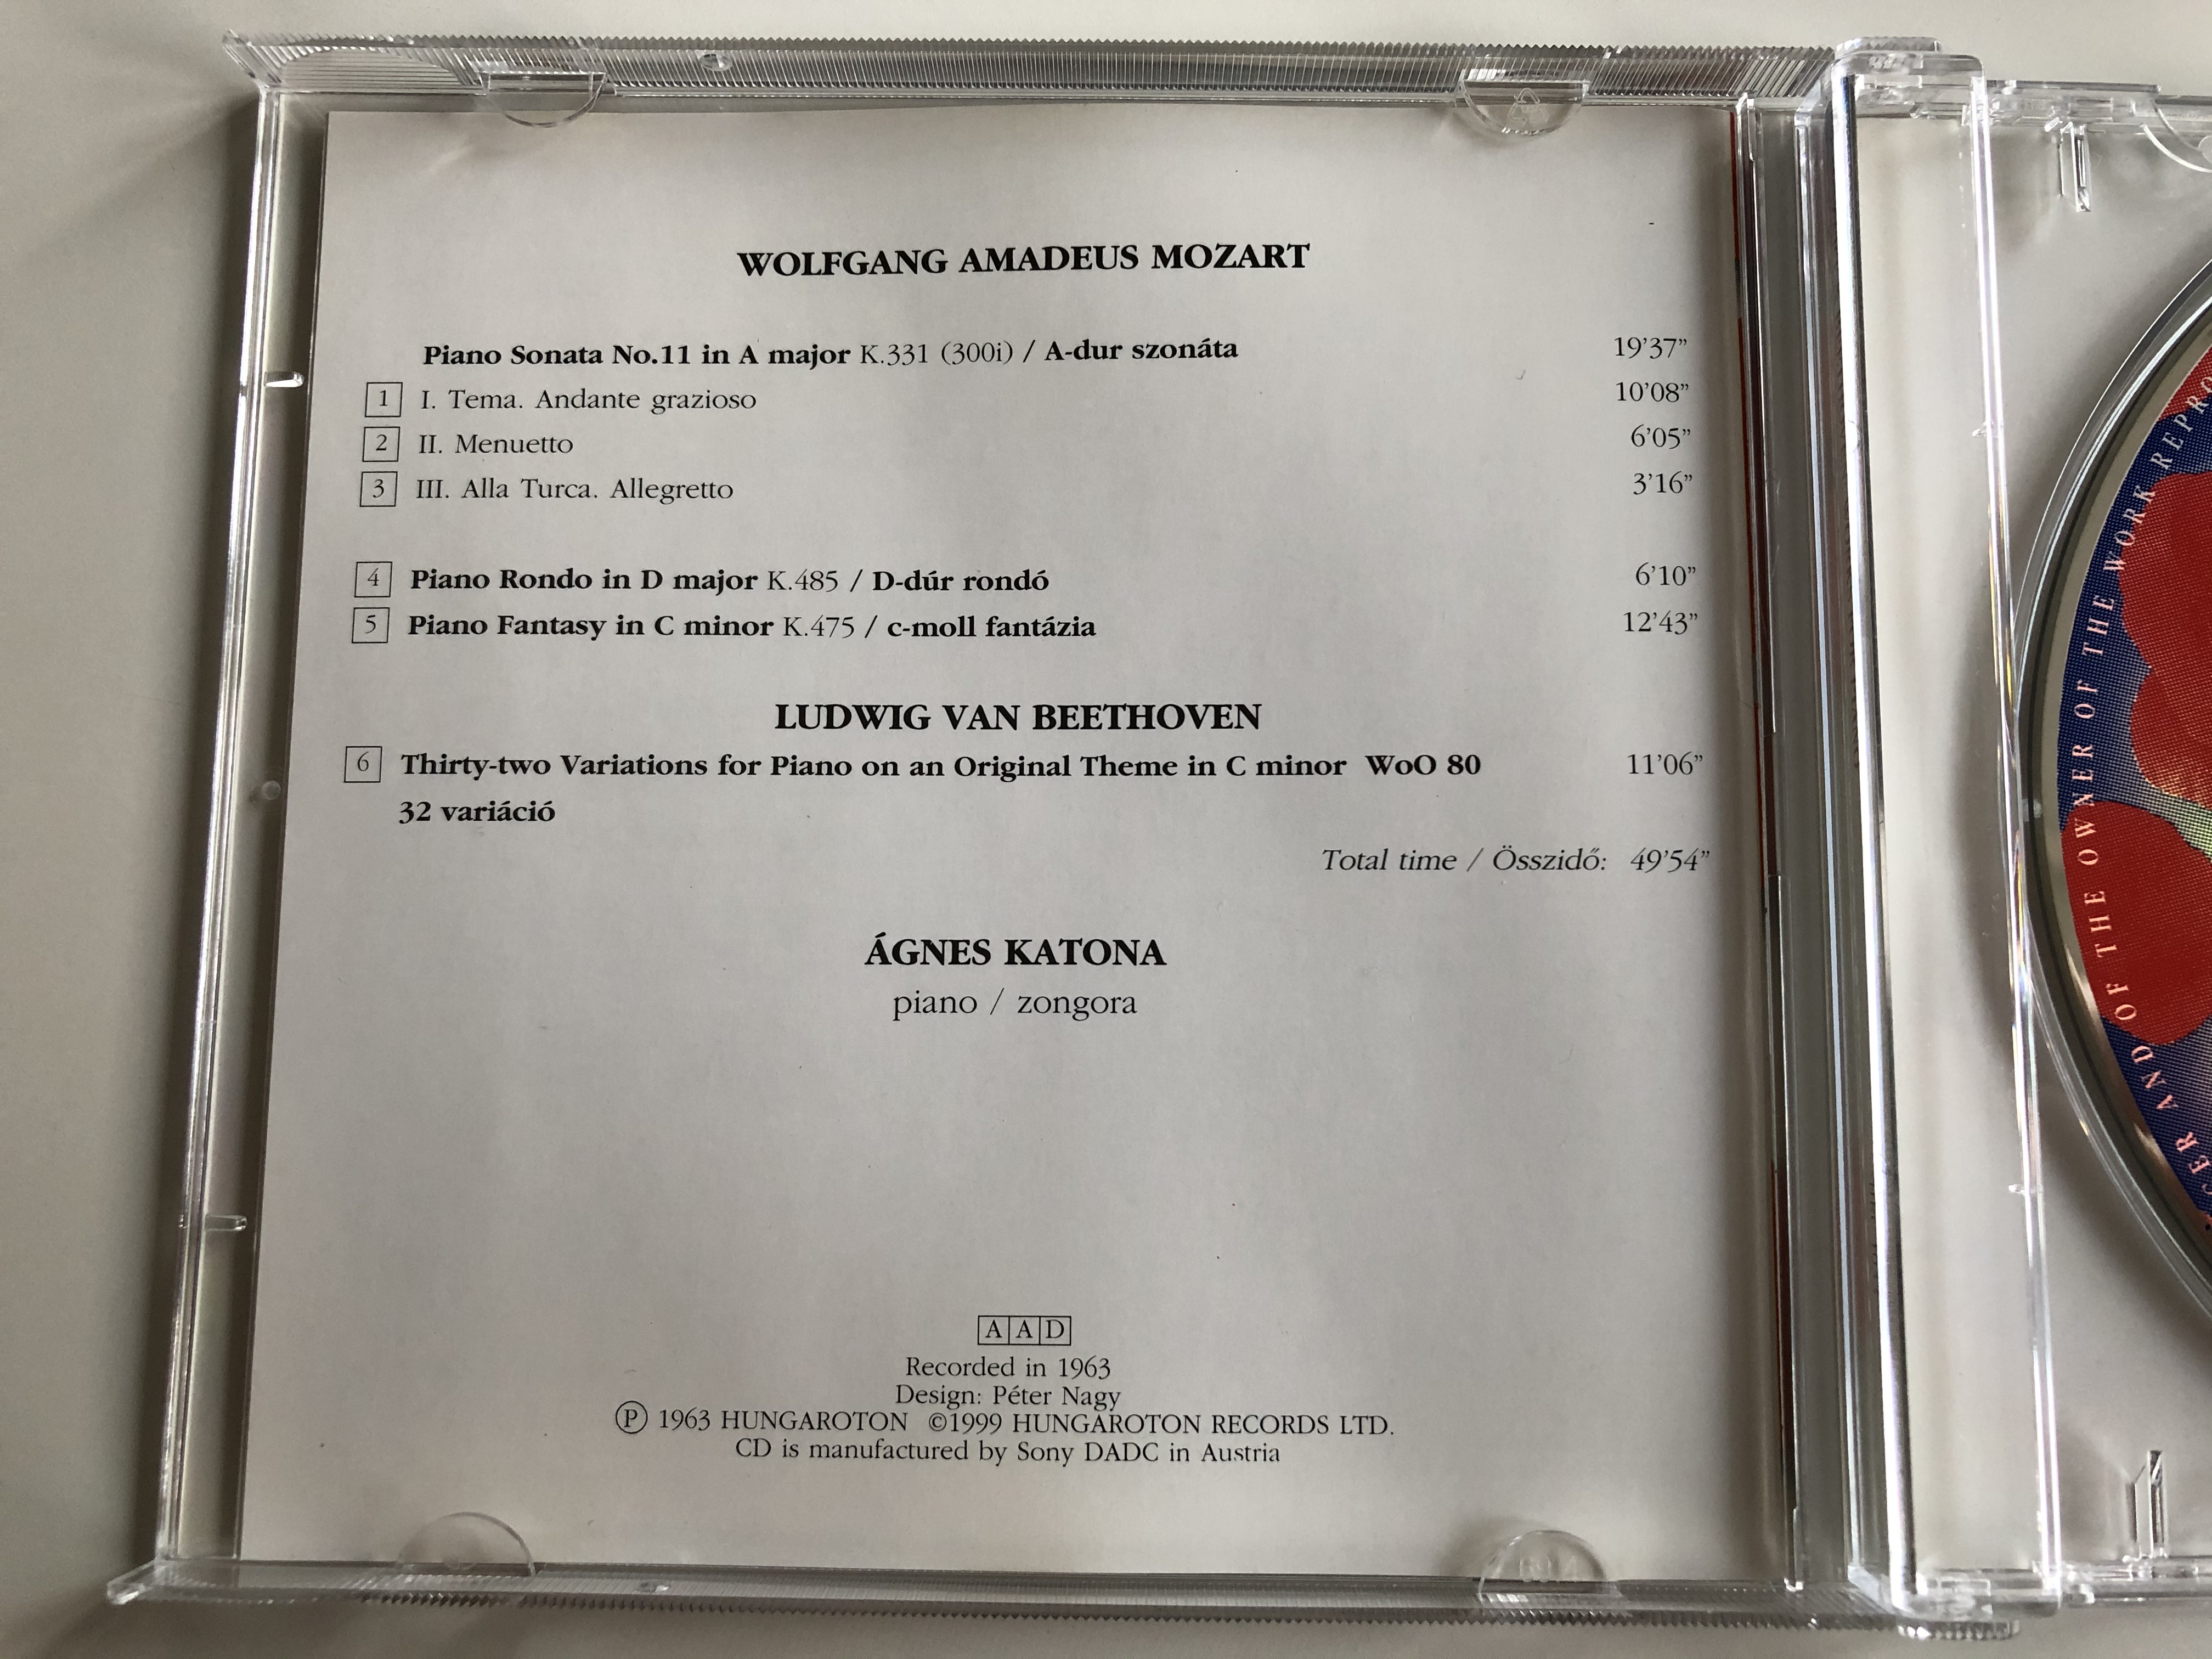 mozart-sonata-in-a-major-k.331-with-the-turkish-march-rondo-in-d-major-fantasy-in-c-minor-beethoven-32-variations-piano-agnes-katona-hungaroton-classic-audio-cd-1963-stereo-hrc-1033-.jpg